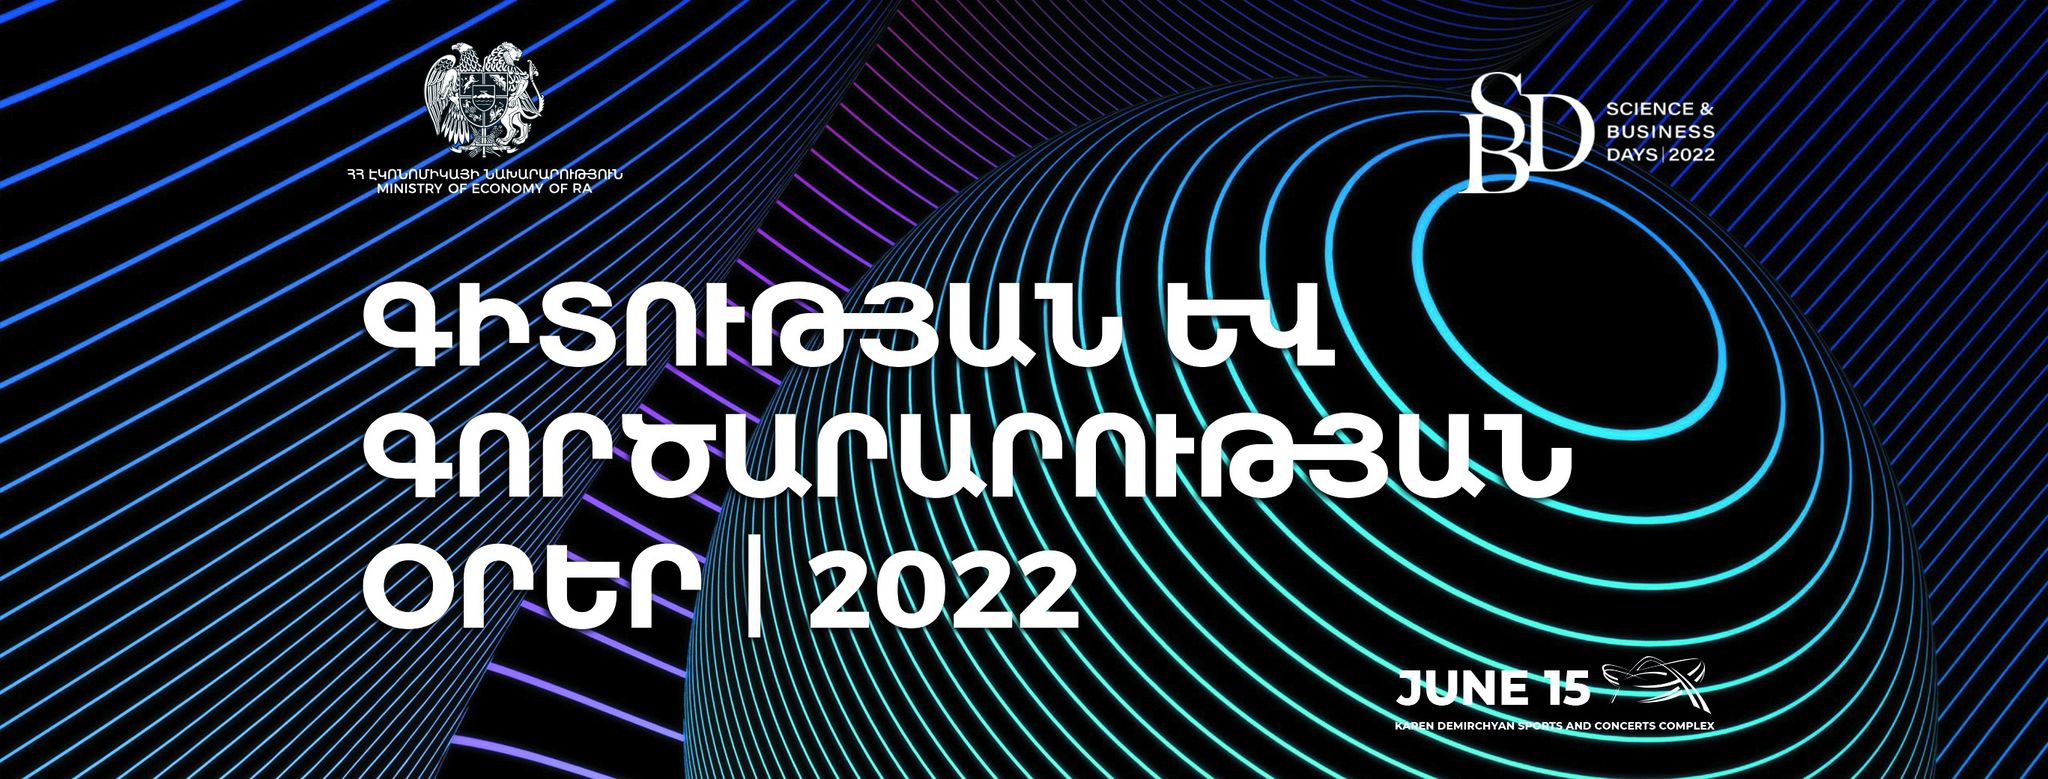 Science & Business Days Armenia 2022